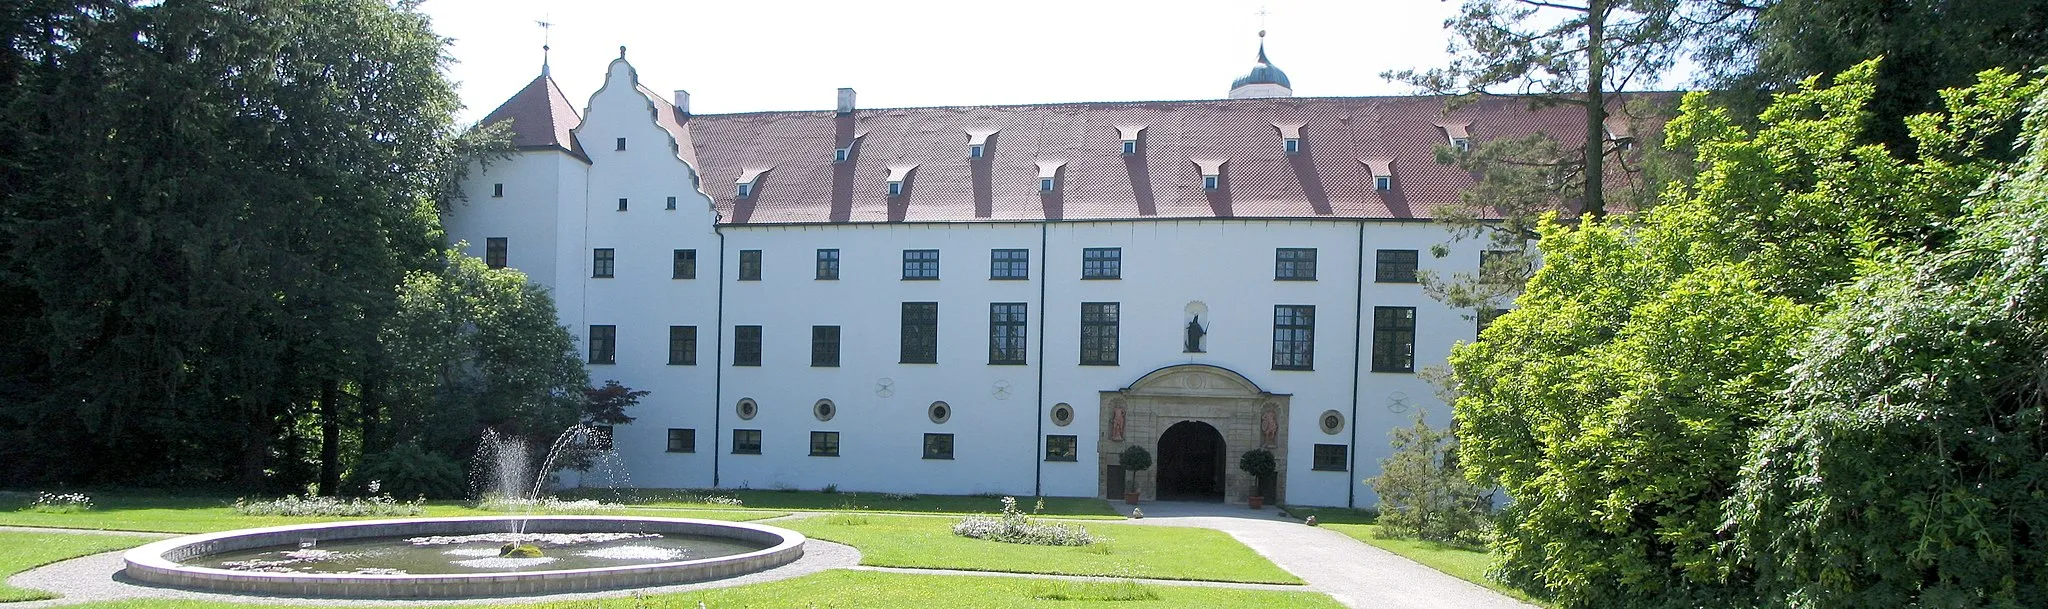 Photo showing: Schloss Kirchheim/Schwaben

Date: June 2006
Camera: Canon Powershot S1